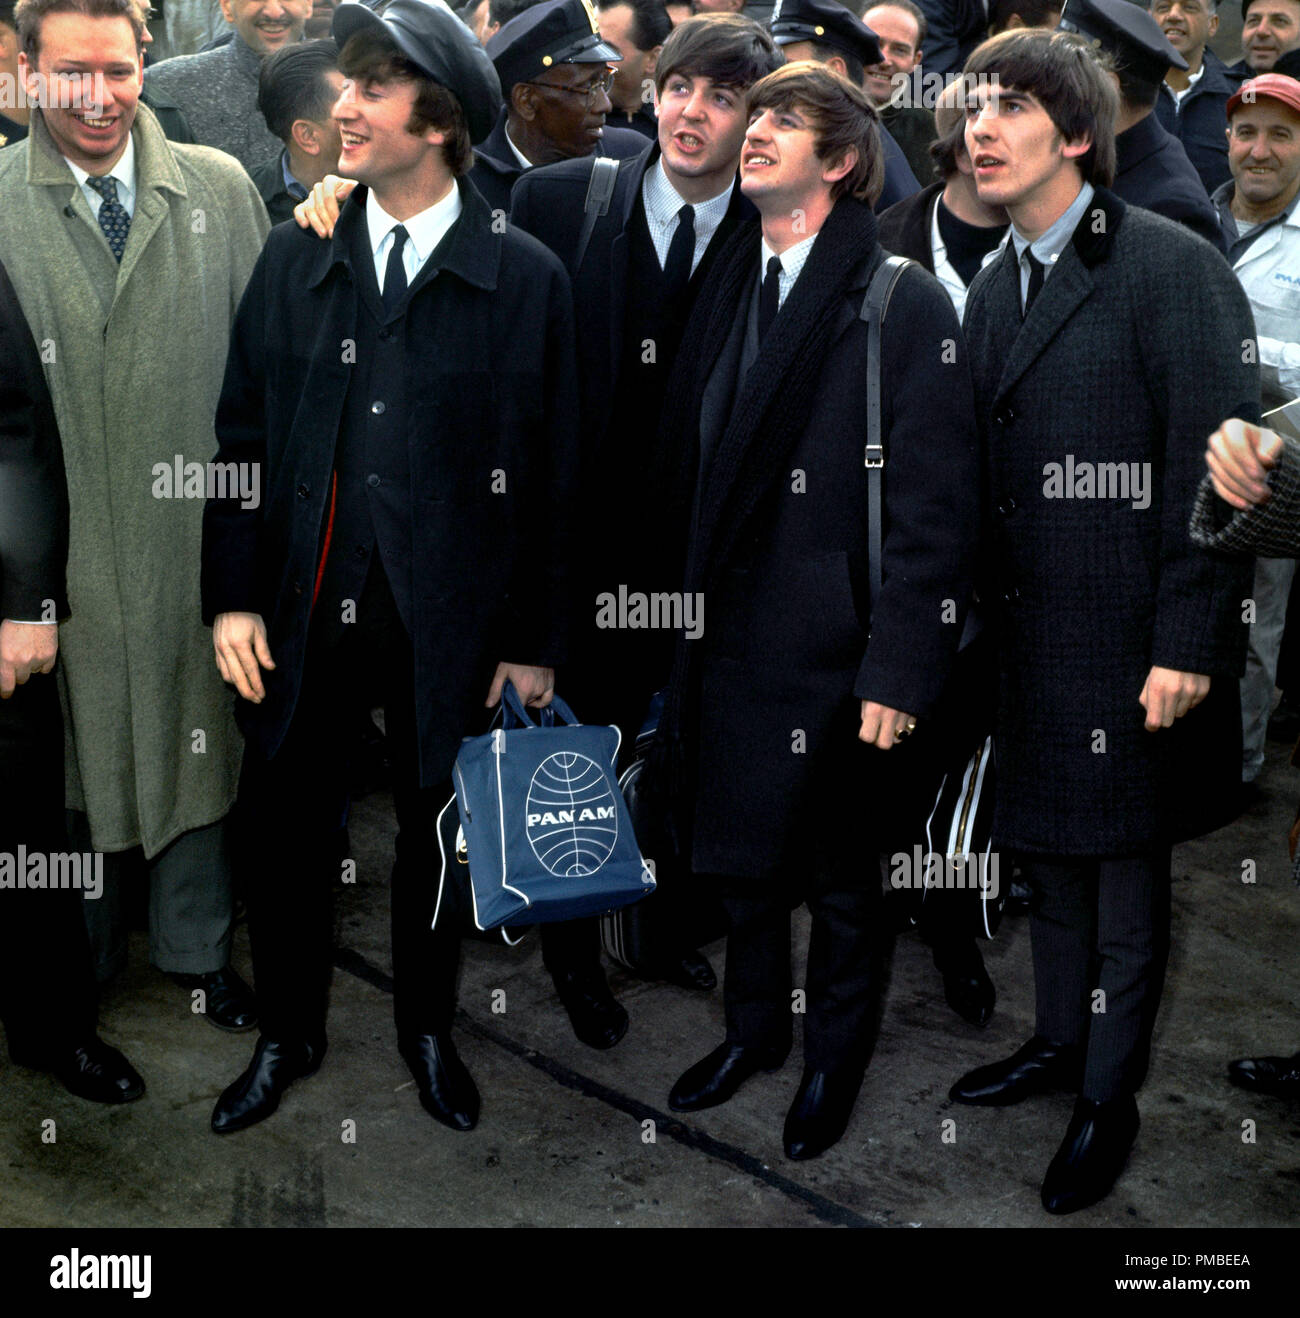 John Lennon, Paul McCartney, Ringo Starr und George Harrison (Beatles,) am Kennedy Airport, 1964 Datei Referenz # 33371 669 THA Stockfoto